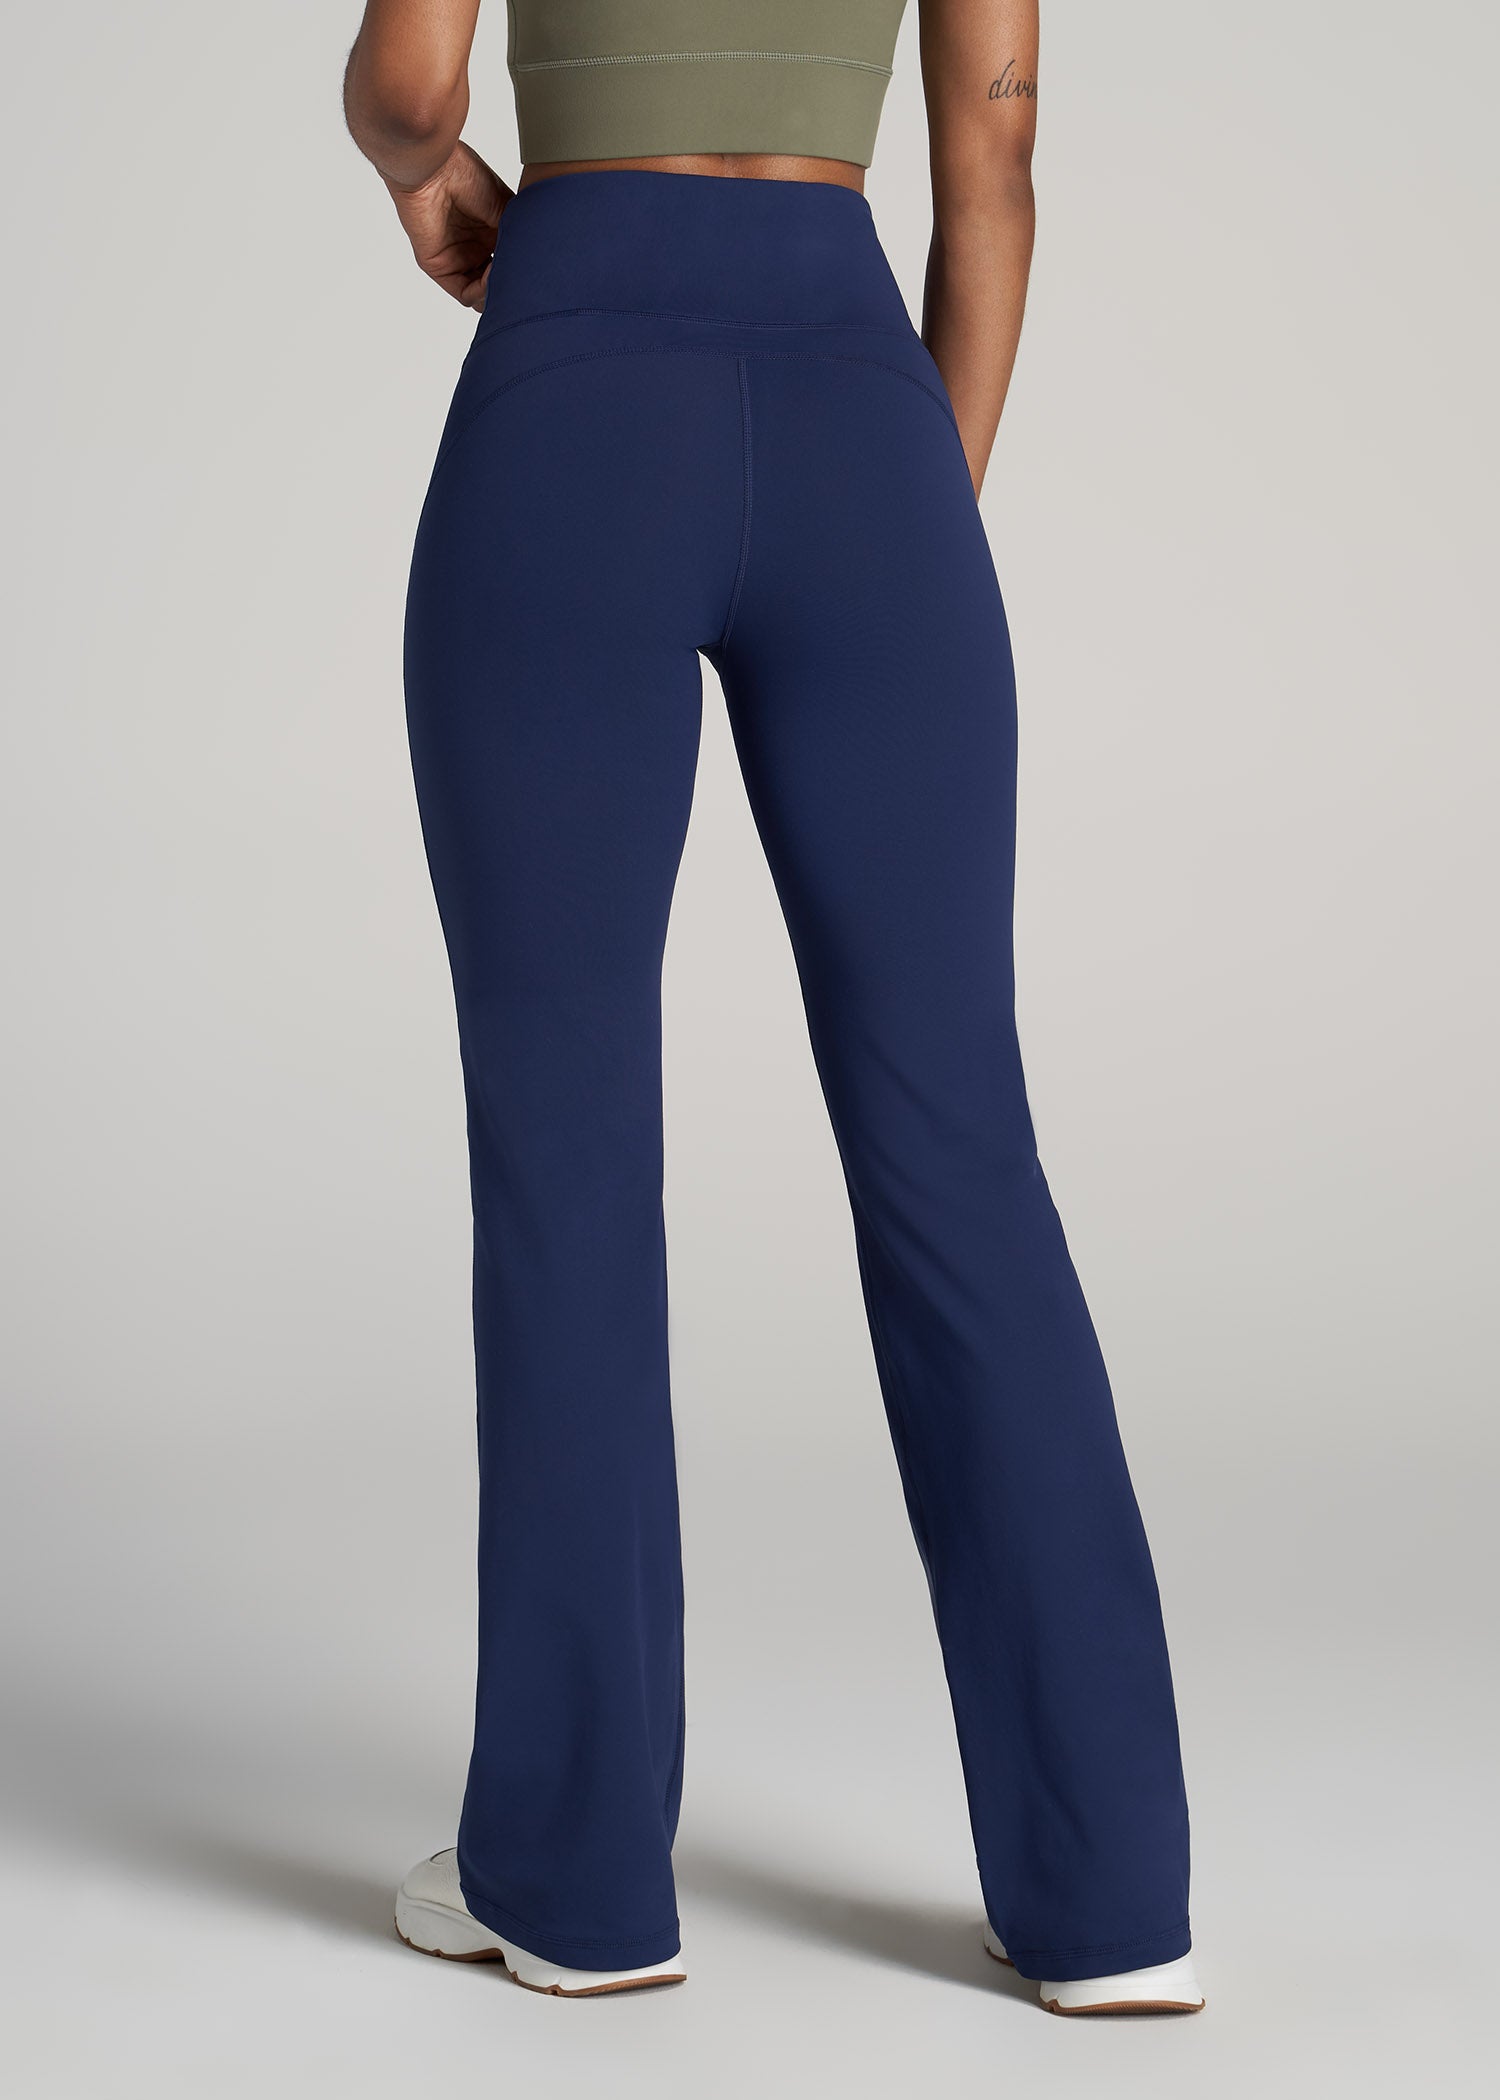 nsendm Unisex Pants Adult Womens Yoga Pants with Pocket Tall Yoga Hip  Seamless Enhancement Effect Women Profile Tights Fleece Yoga Pants(Blue, M)  